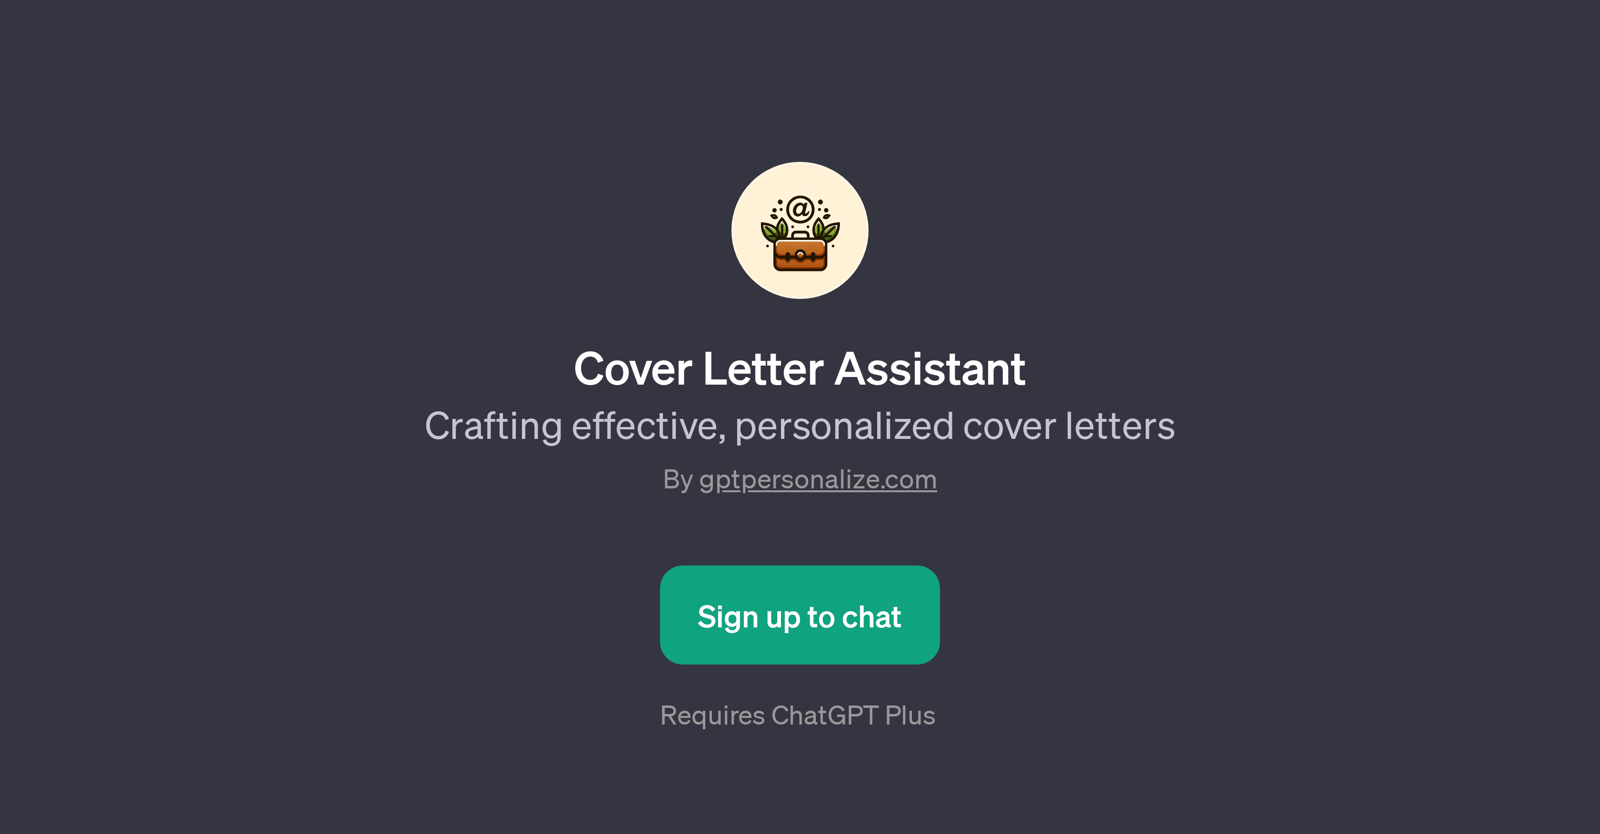 Cover Letter Assistant website